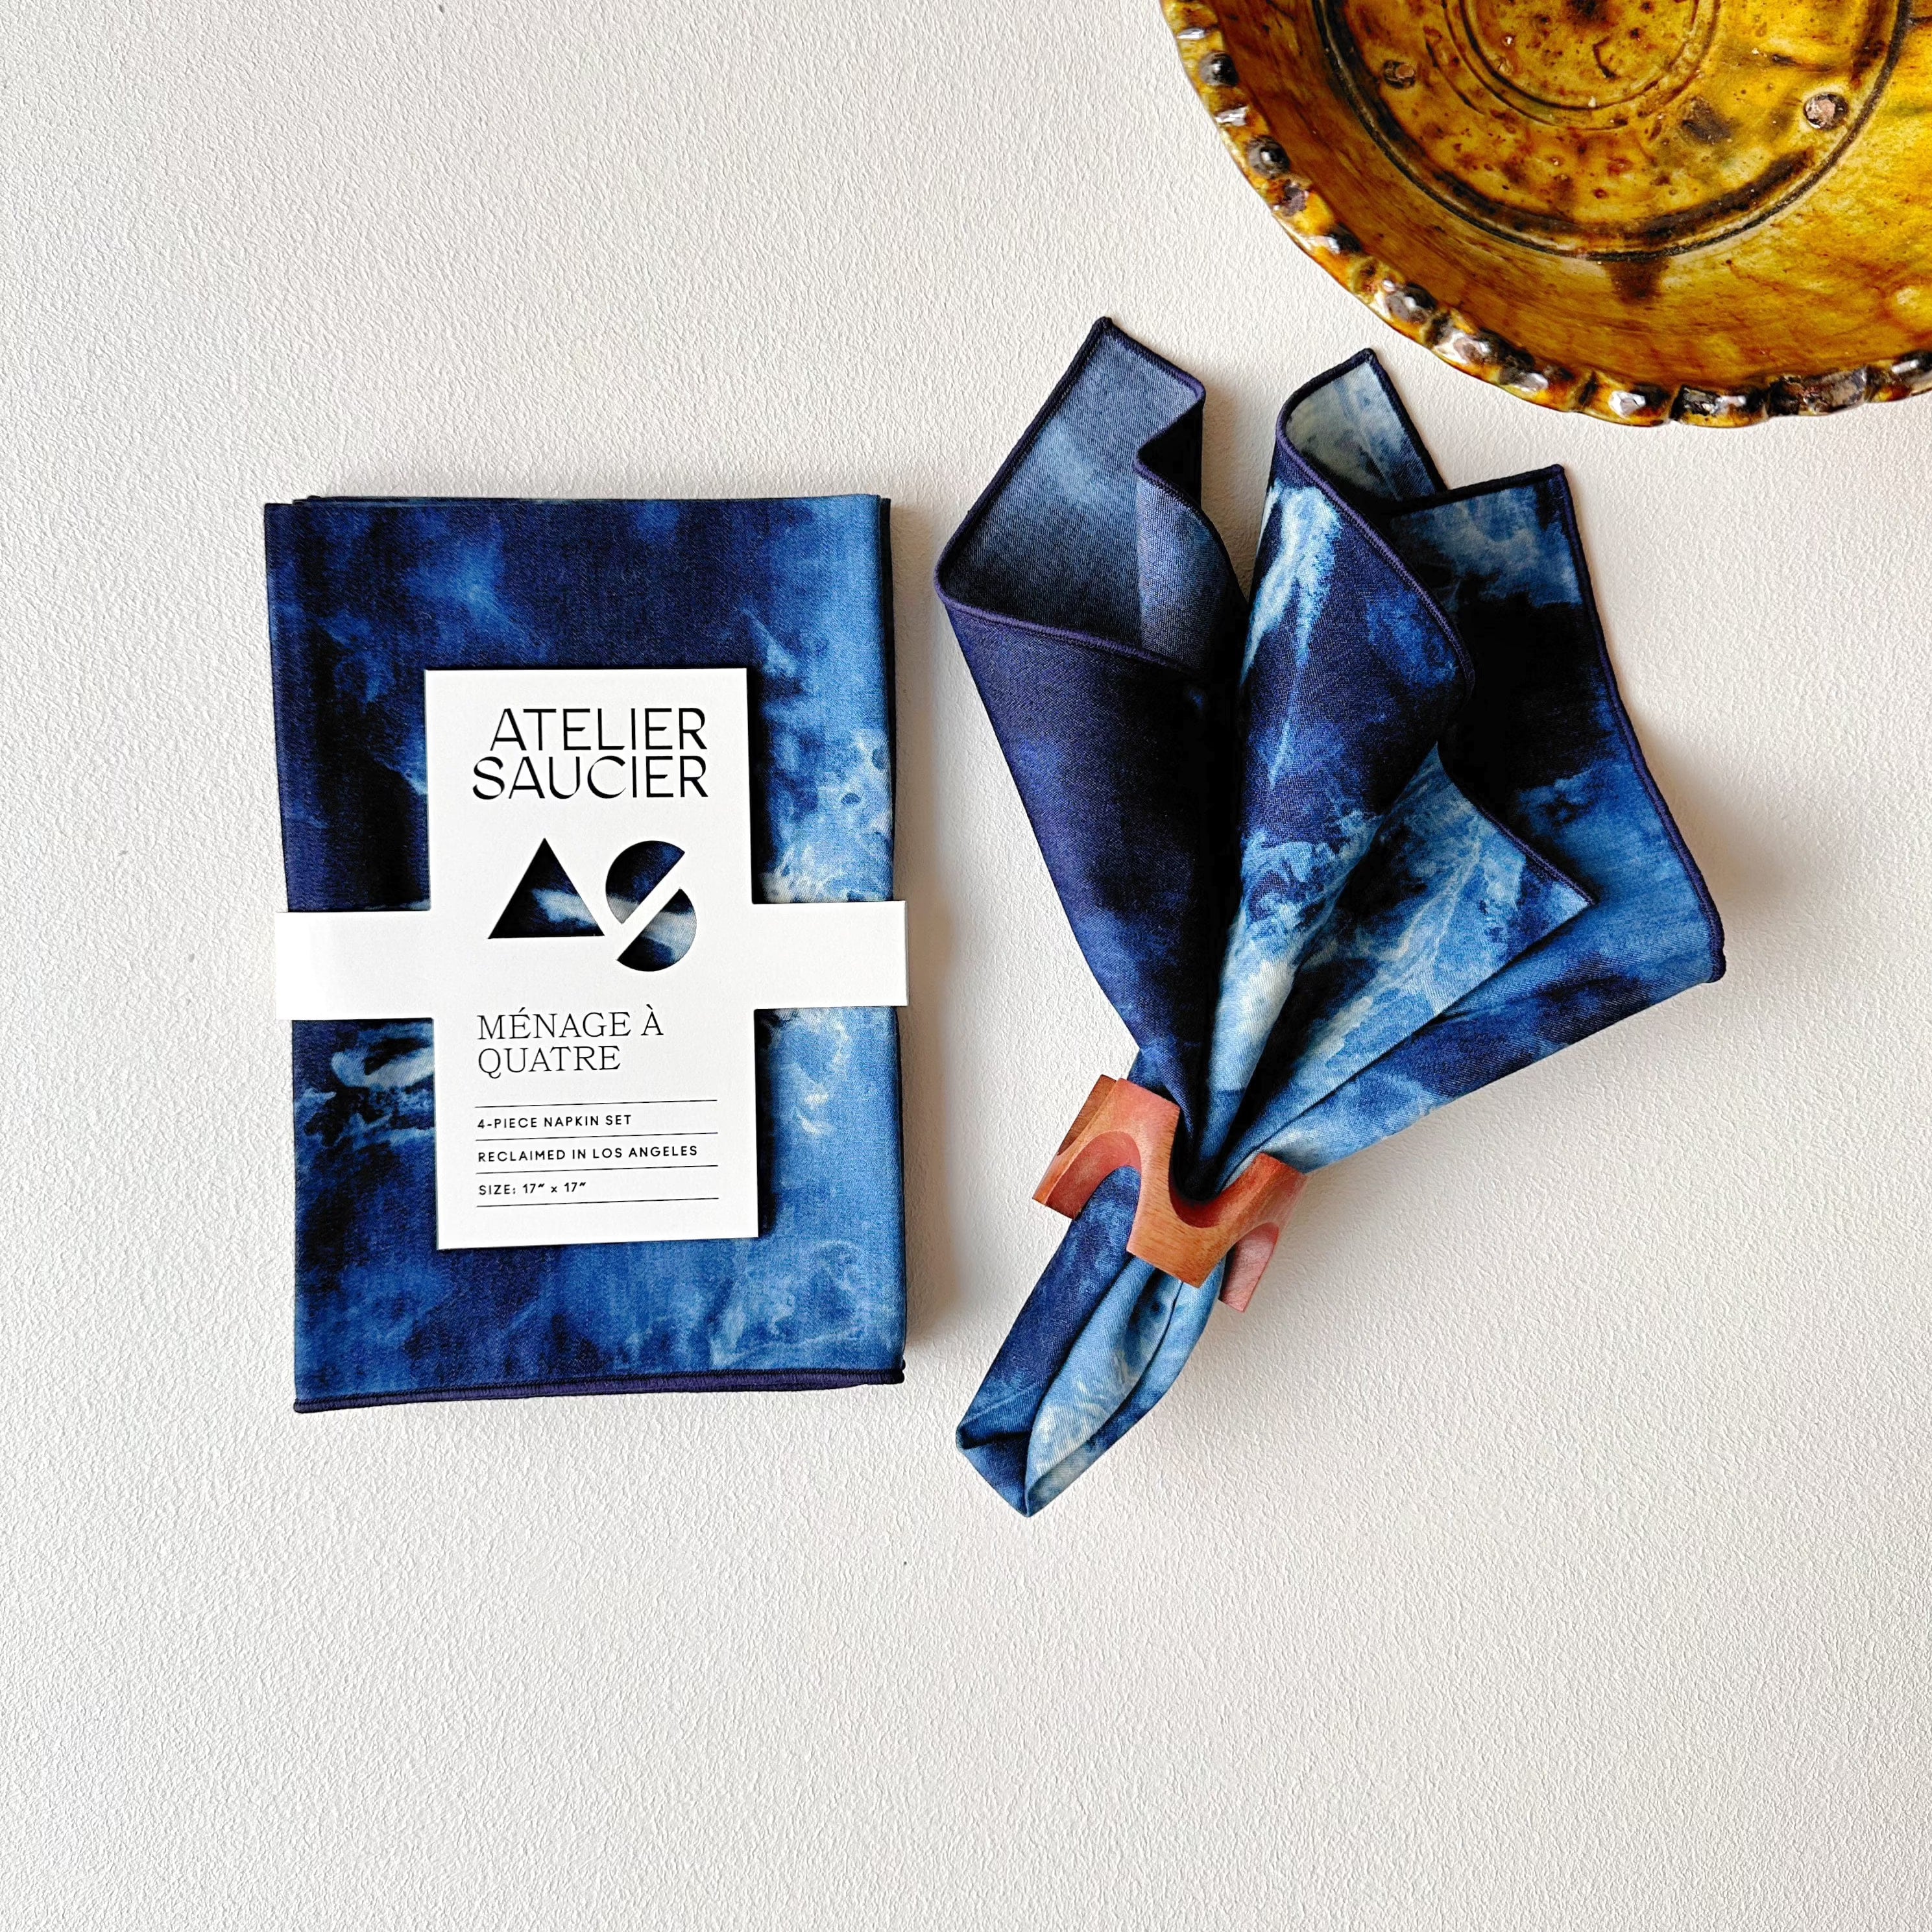 After Dark Linen Napkin Set Tie- Dye Denim Linen Napkin Set by ATELIER SAUCIER